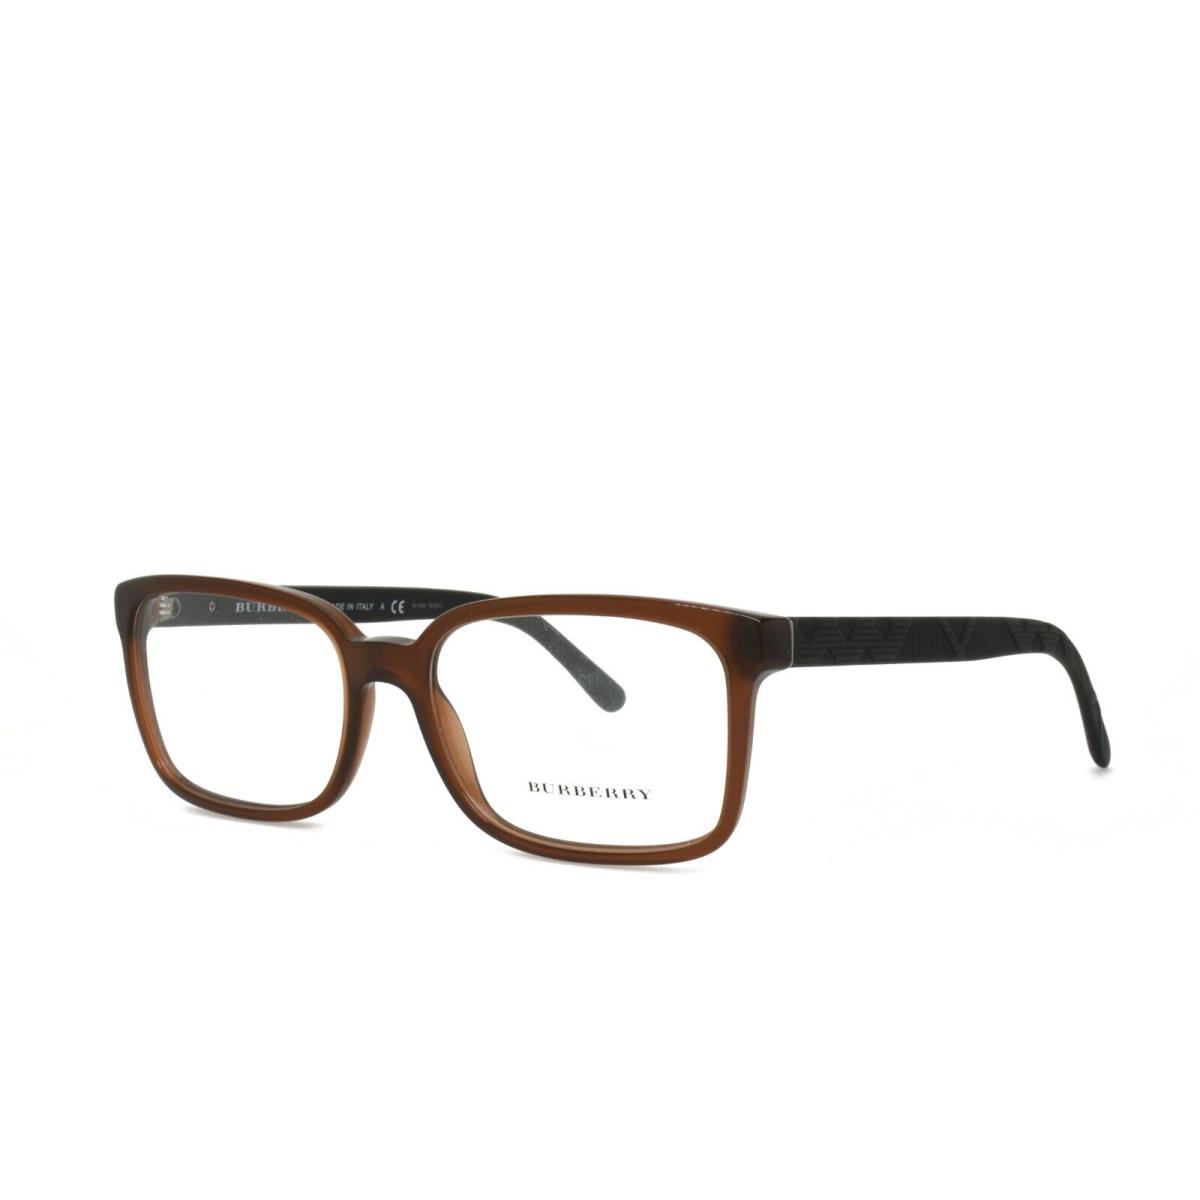 Burberry 2175 3500 55-17-140 Brown Black Eyeglasses Frames